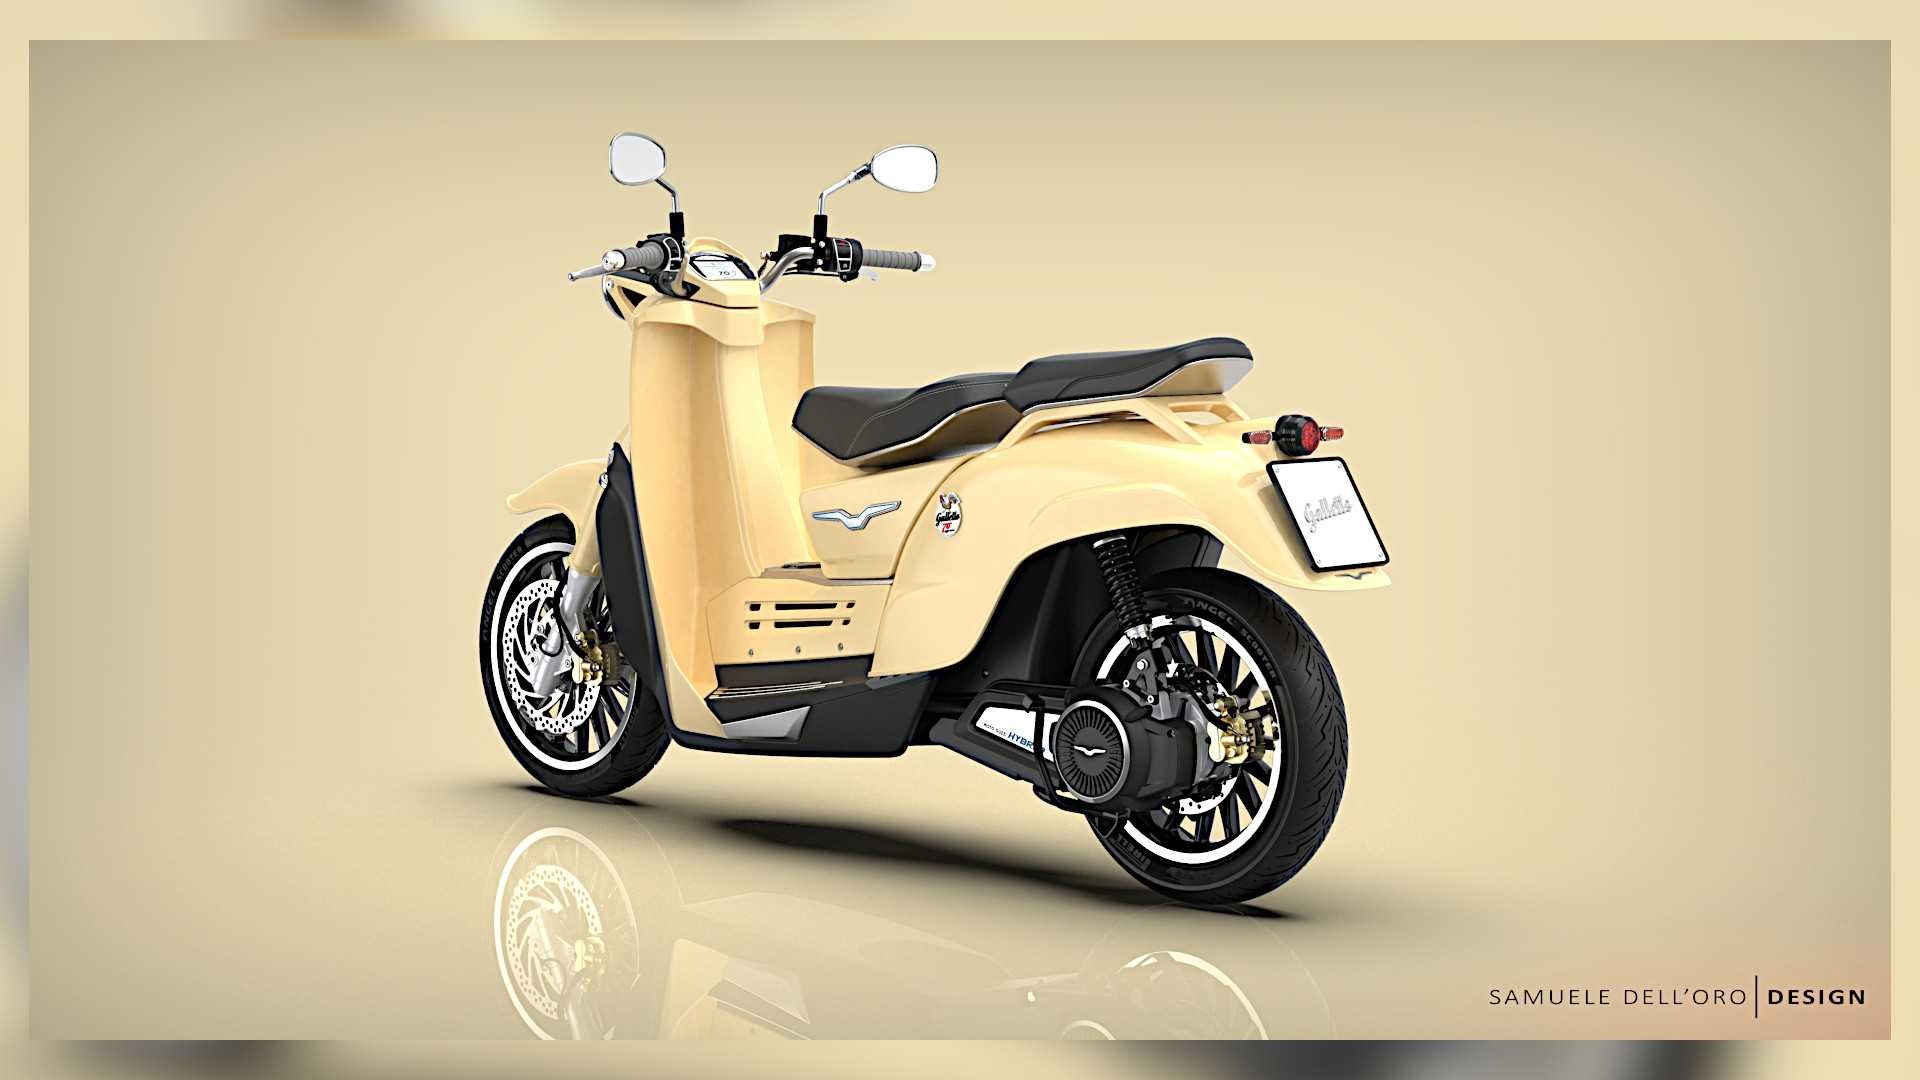 Moto Guzzi Galletto概念车为标志性的踏板车通电